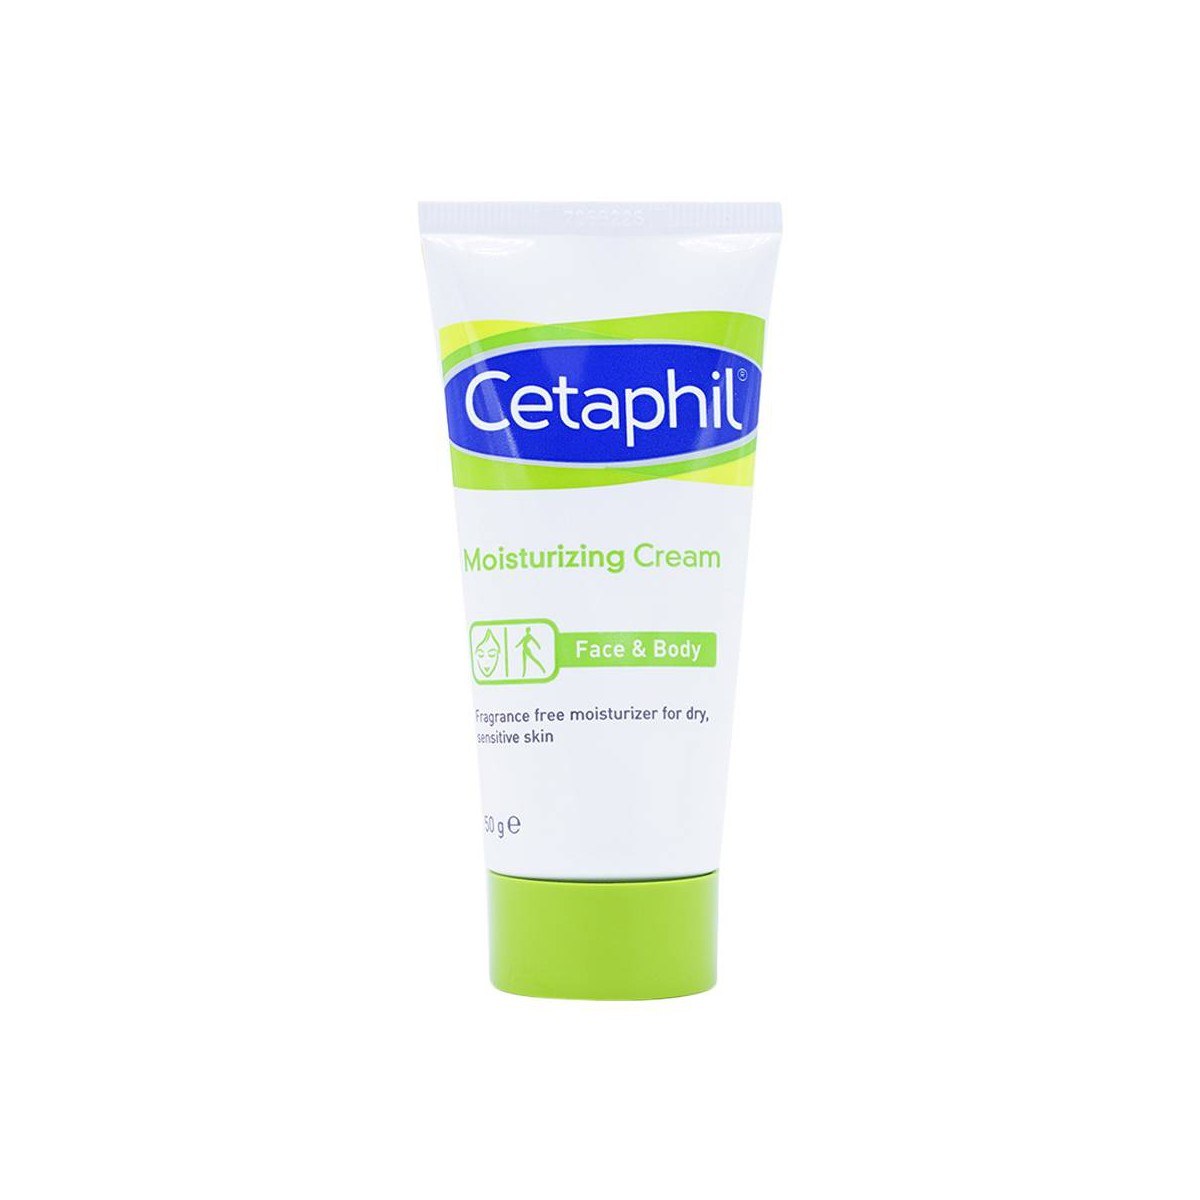 Kem dưỡng ẩm cetaphil moisturizing cream review 2